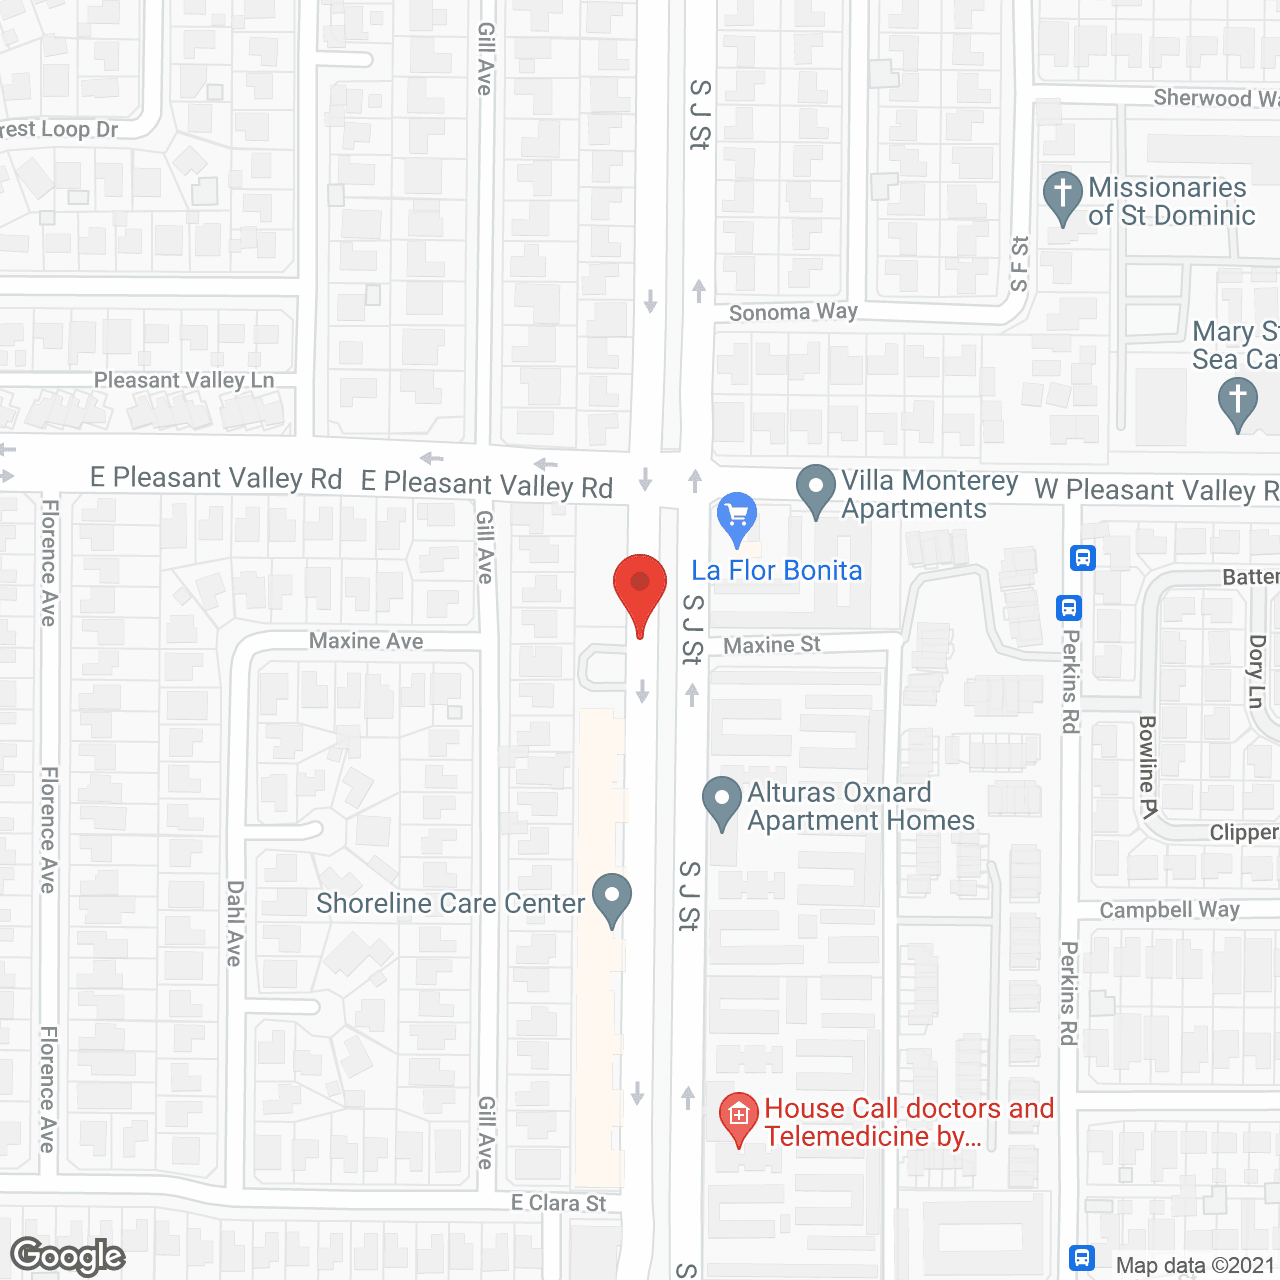 Shoreline Care Center in google map